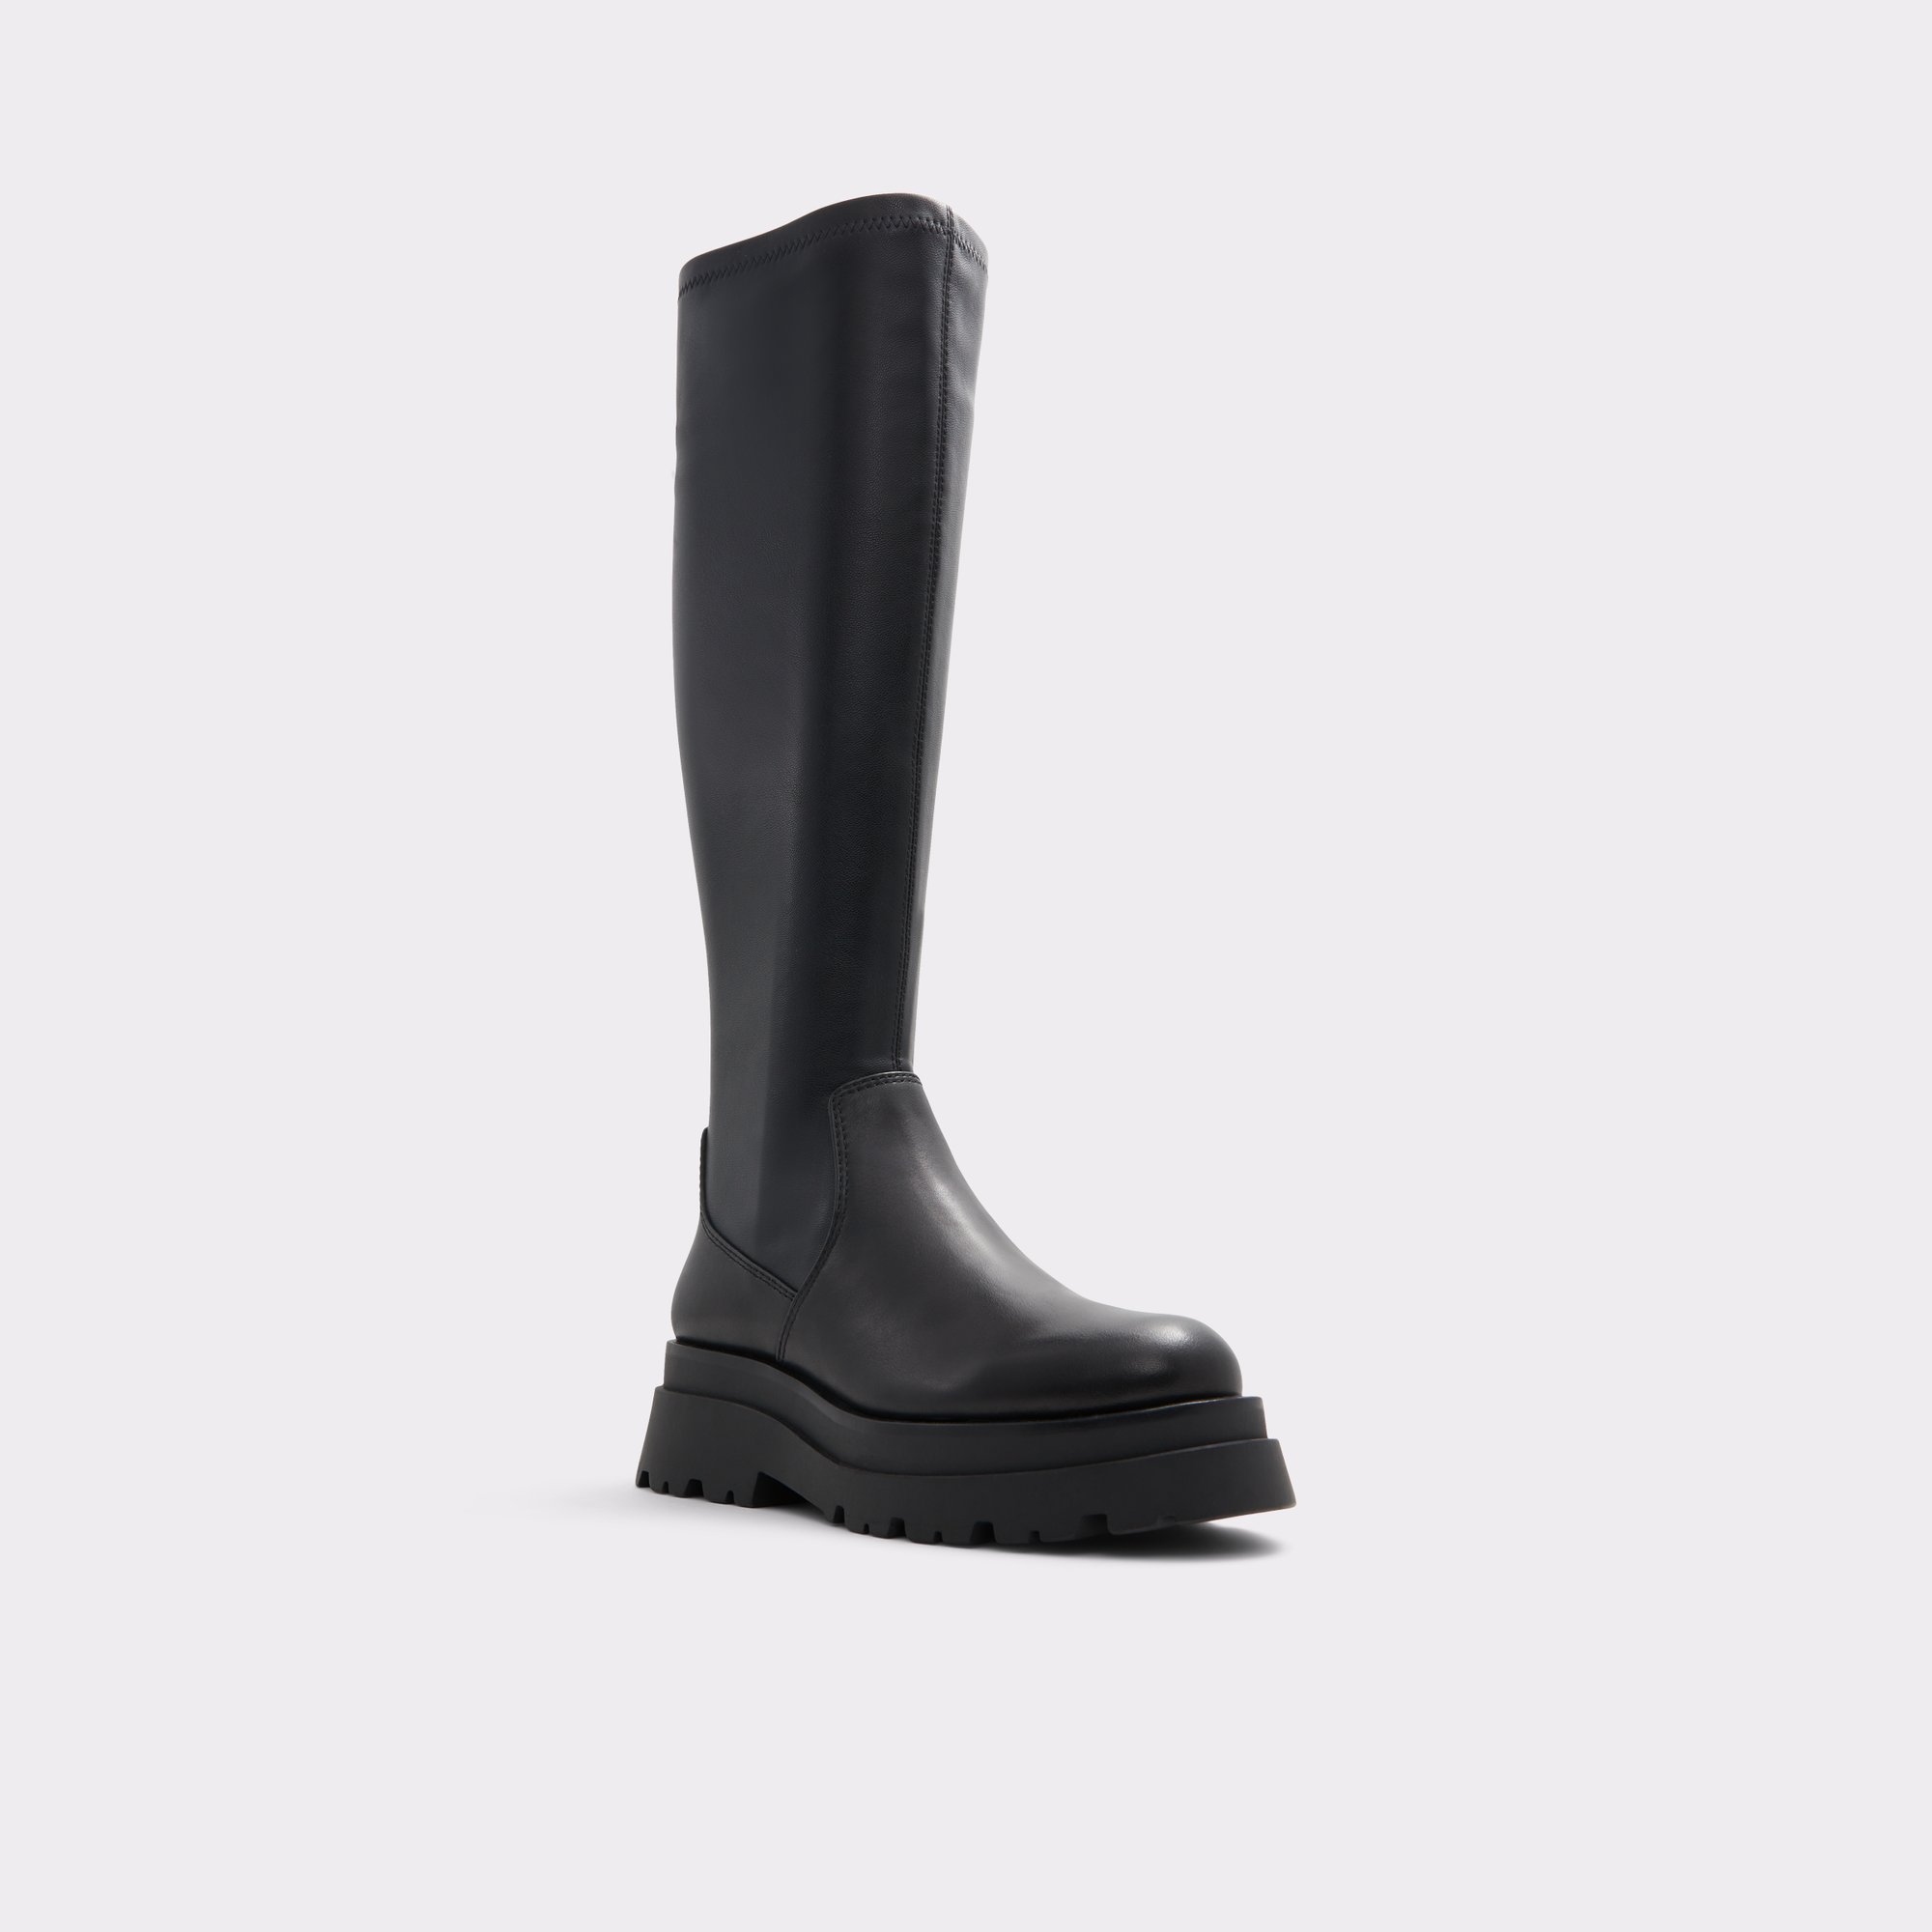 Luders Black Women's Tall Boots | ALDO US